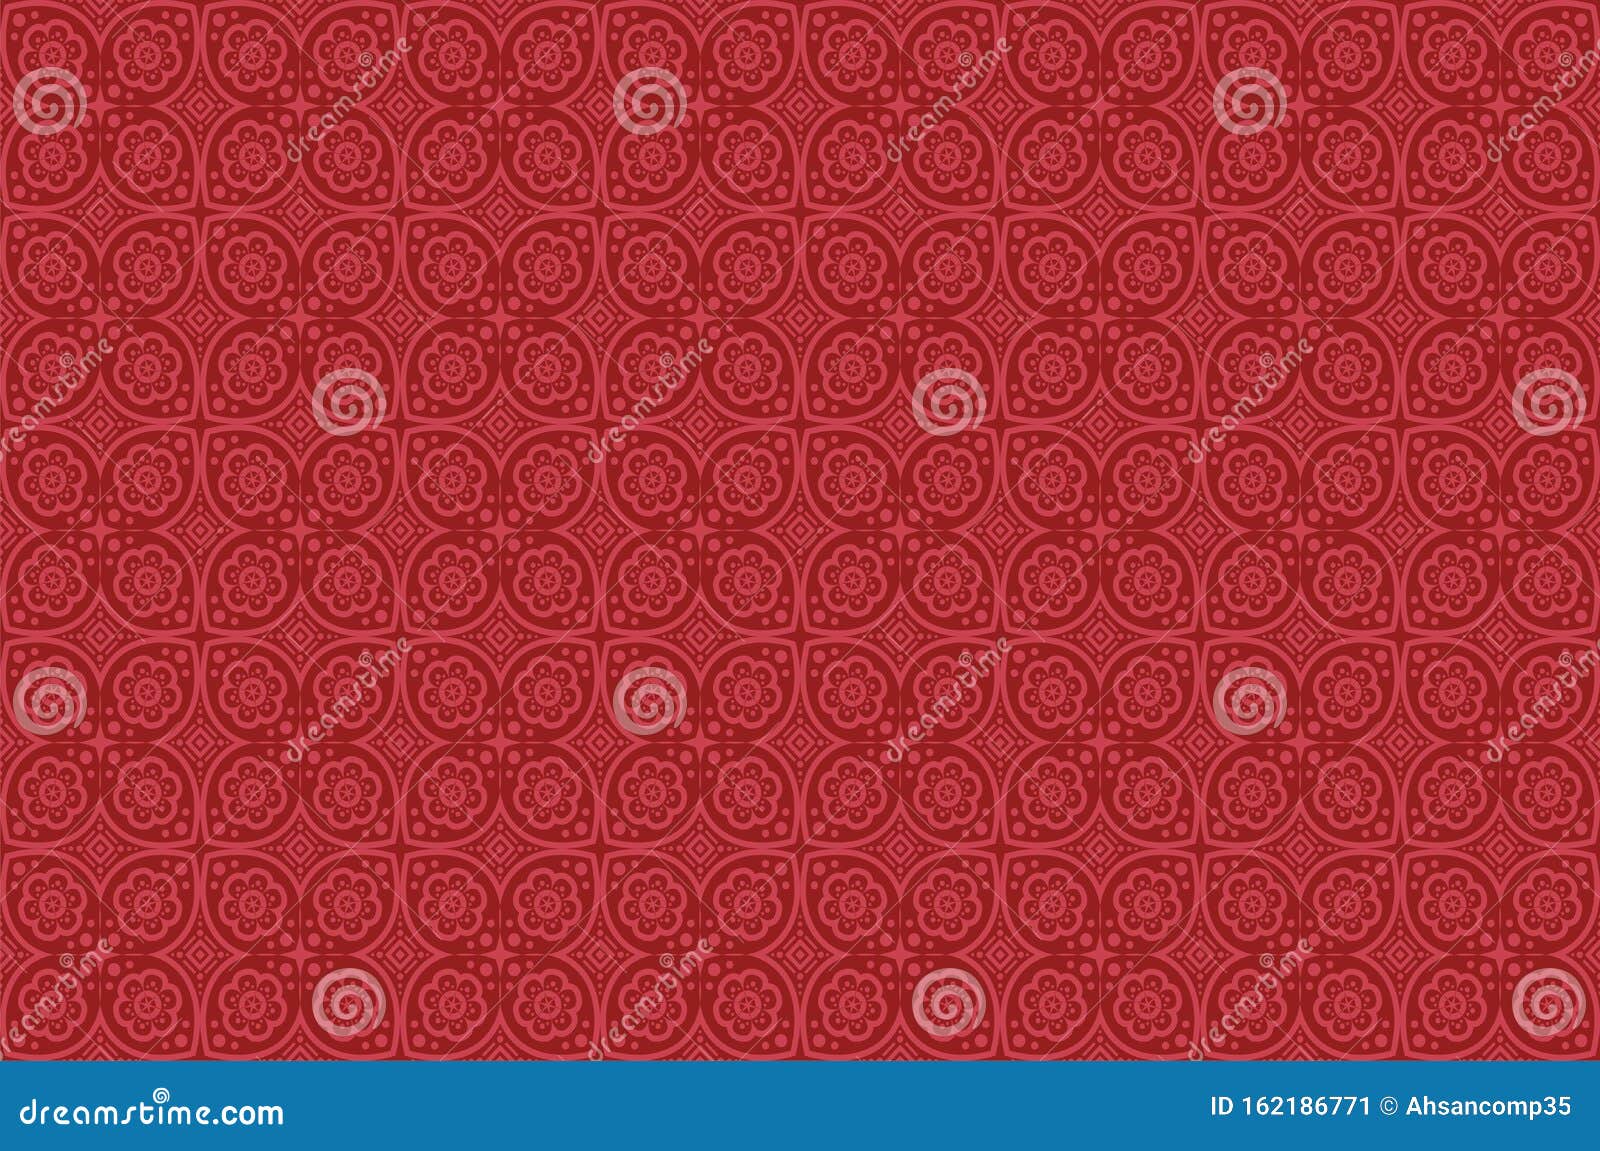 Wallpaper Batik Background, Pattern, Ornament, HD Stock Illustration -  Illustration of fabric, cubism: 162186771